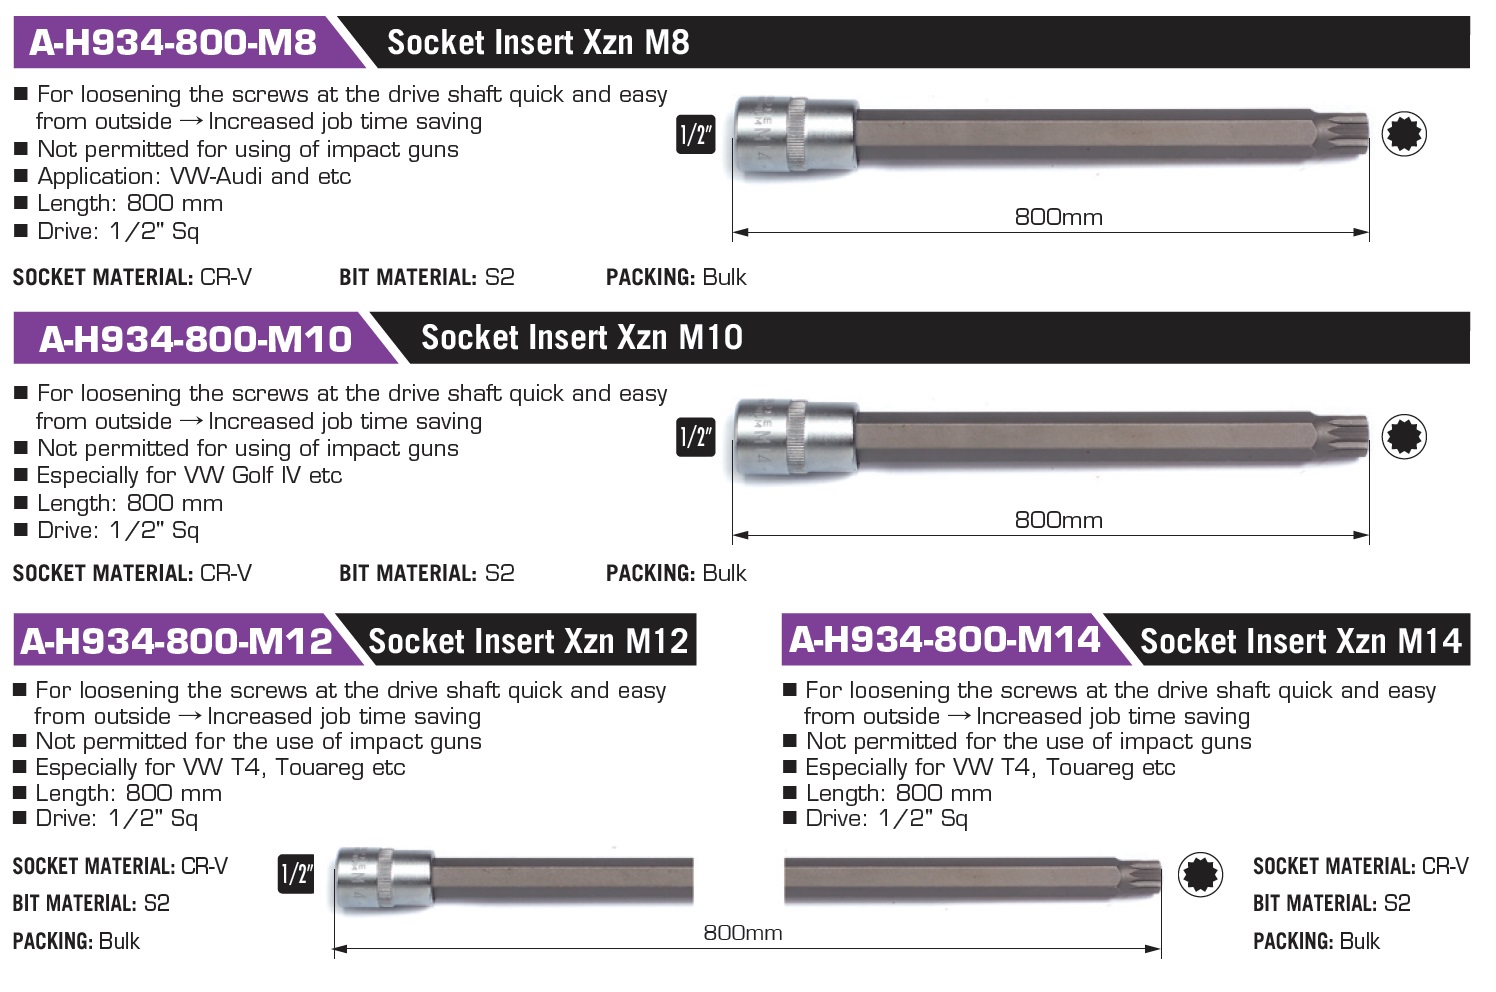 A-H934-800-M8 Socket Insert Xzn M8